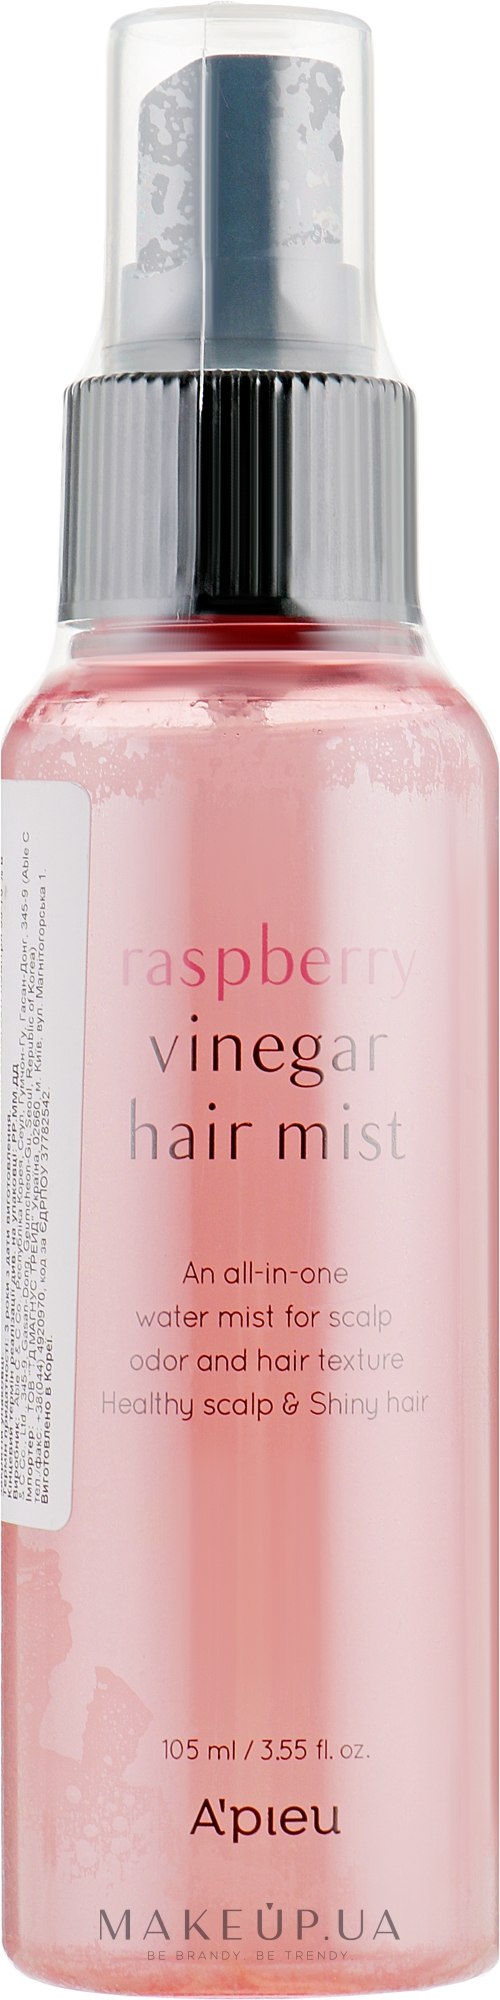 Мист для волос с малиновым уксусом - A'pieu Raspberry Vinegar Hair Mist — фото 105ml